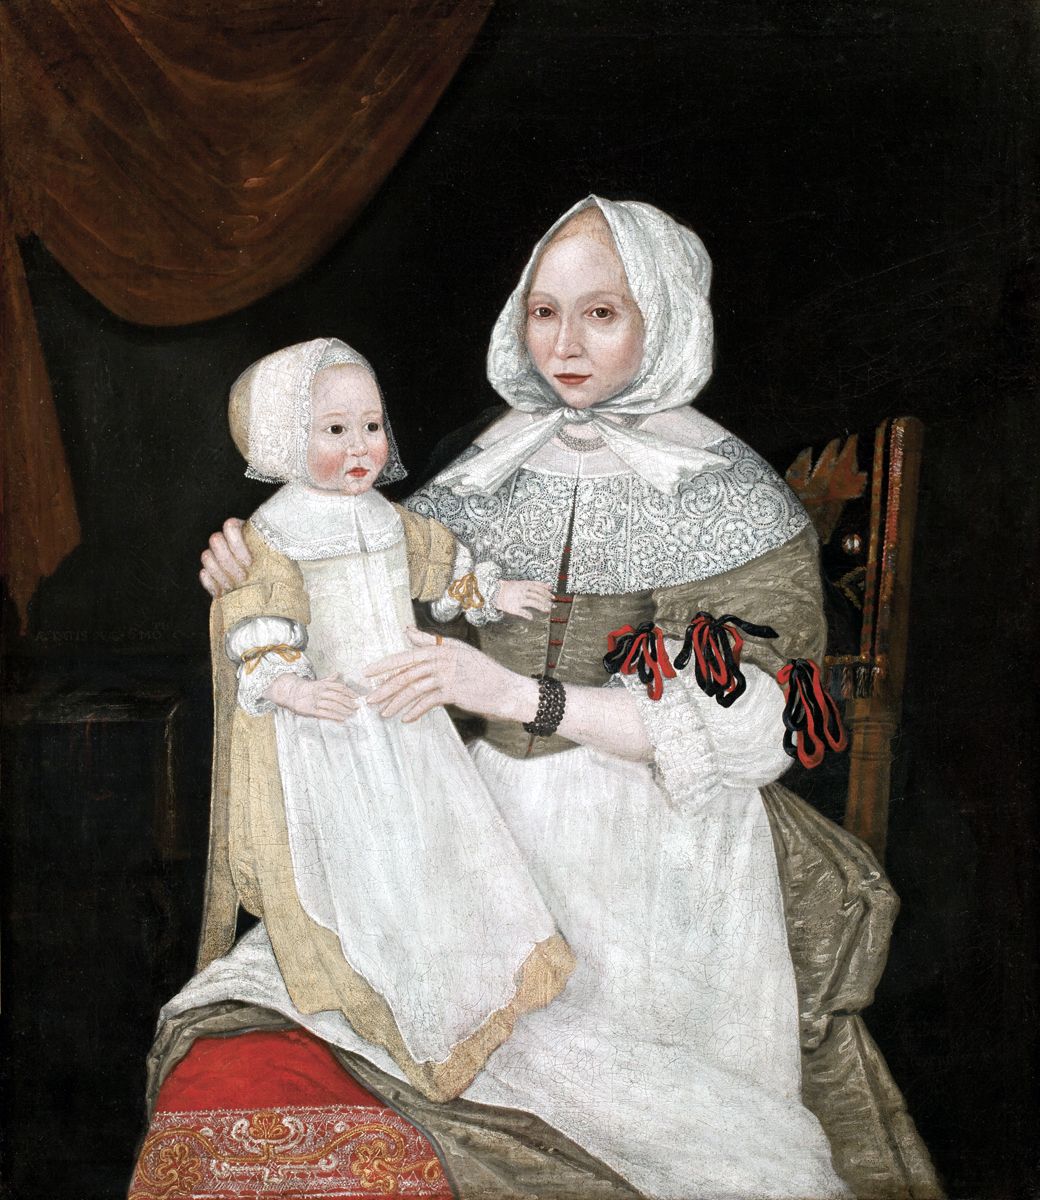 Freake painter, Elizabeth Clarke Freake (Mrs. John Freake) and Baby Mary, c. 1671 and 1674, oil on canvas, 42 1/2 x 36 3/4" / 108 x 93.3 cm (Worcester Art Museum)